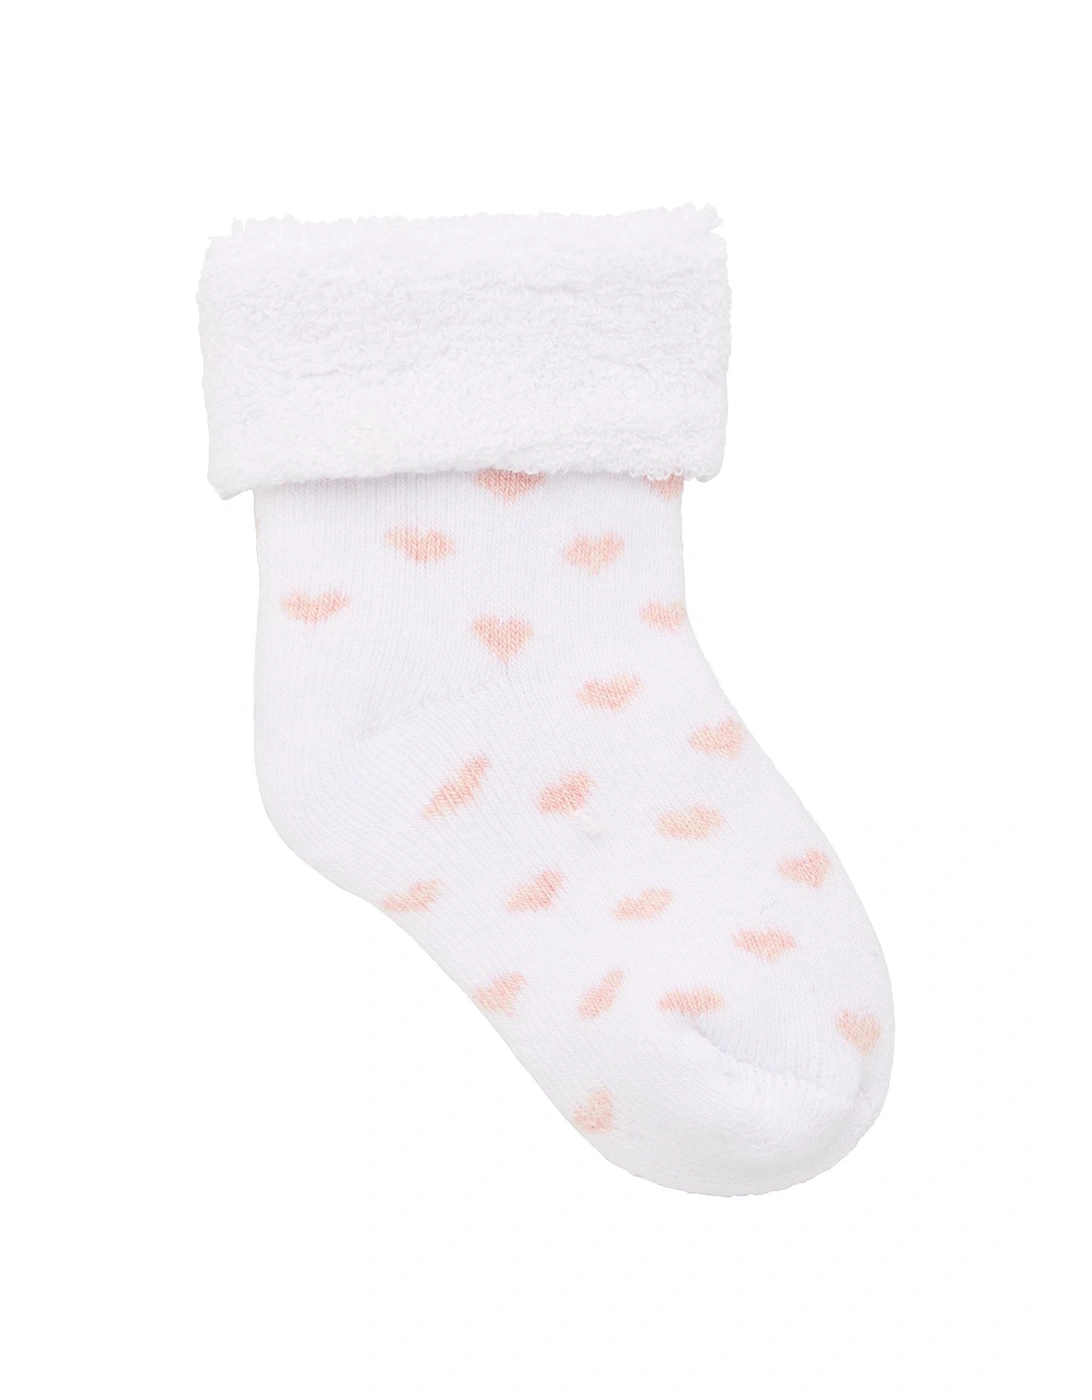 Baby Girls 3 Pack Little Heart, Stripe and Plain Terry Socks - Pink